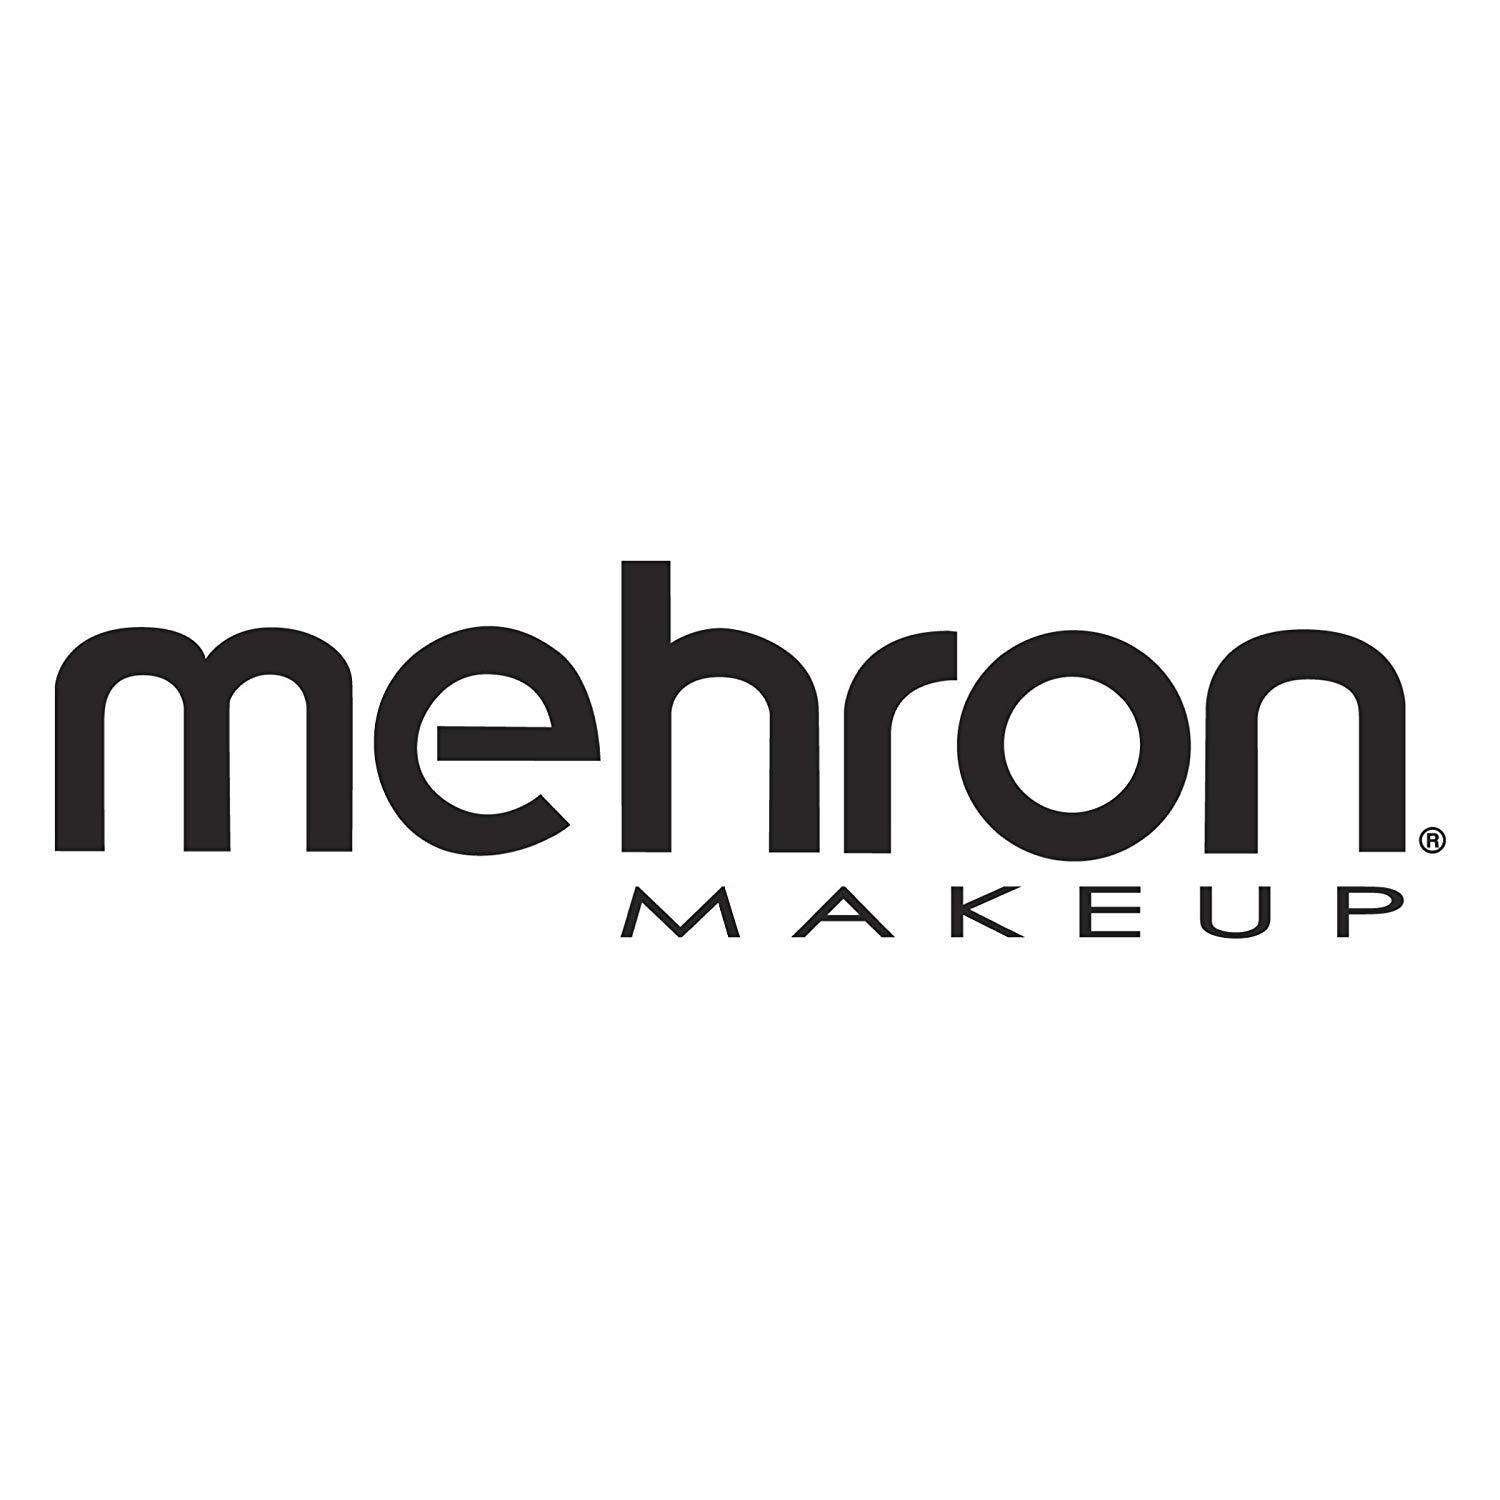 Mehron Special FX All-Pro Makeup Kit